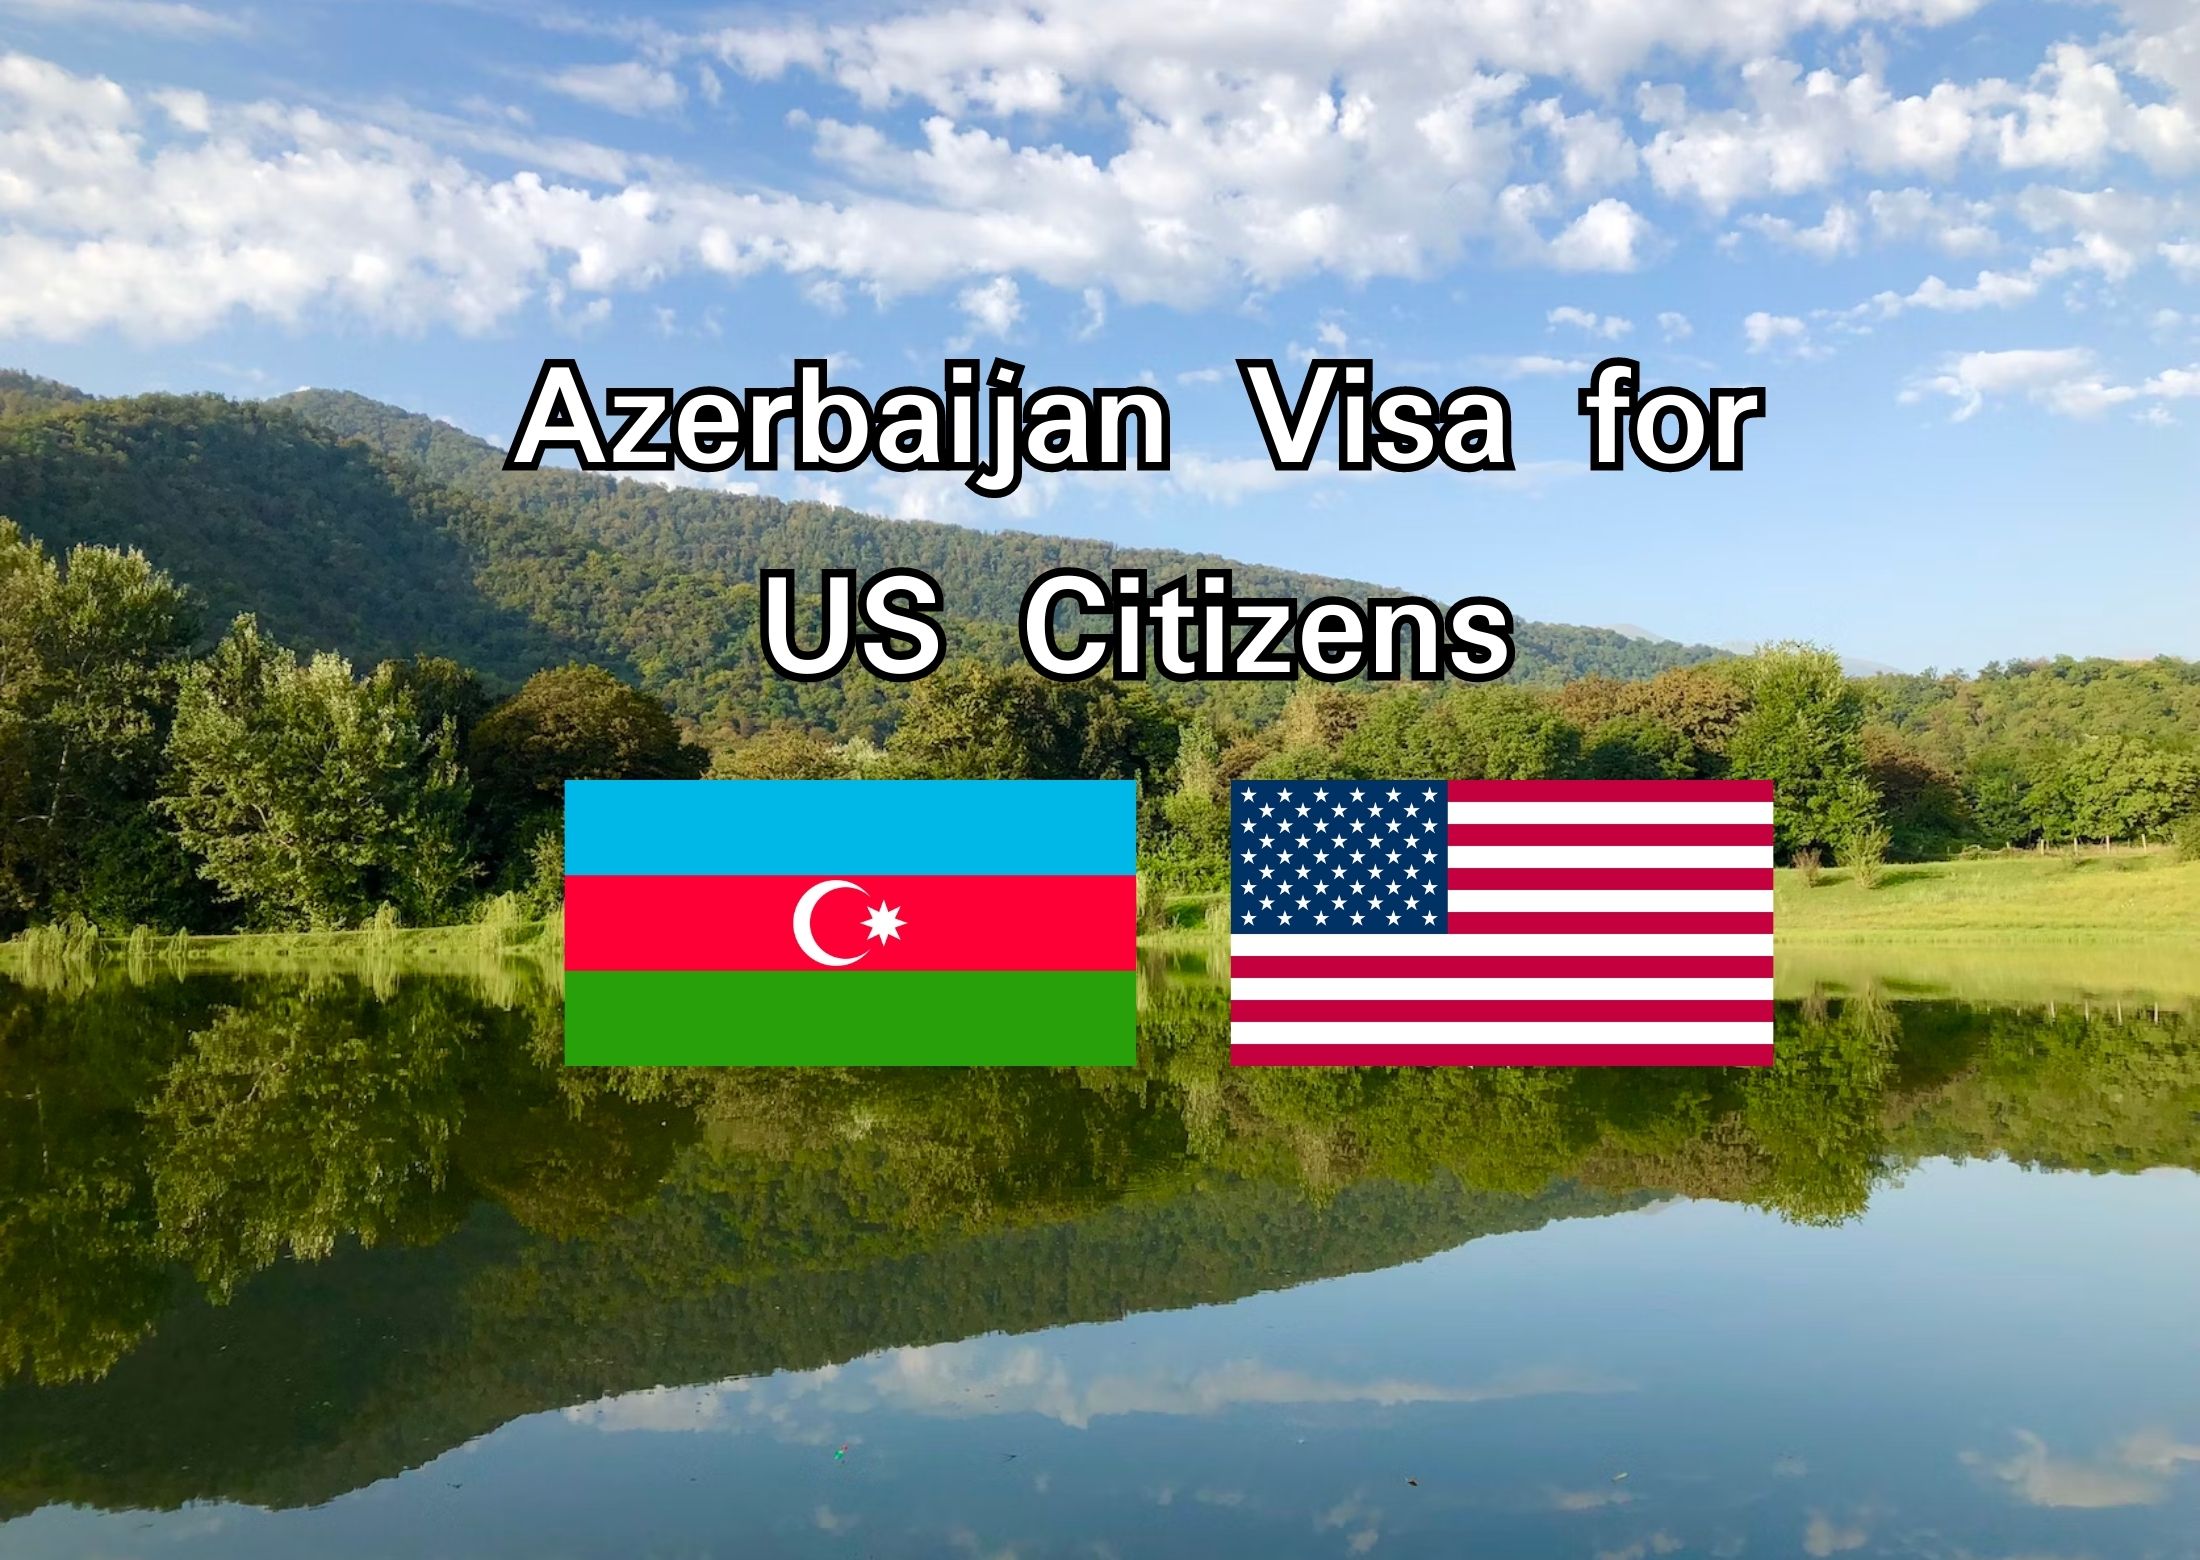 Azerbaijan visa for US Citizens